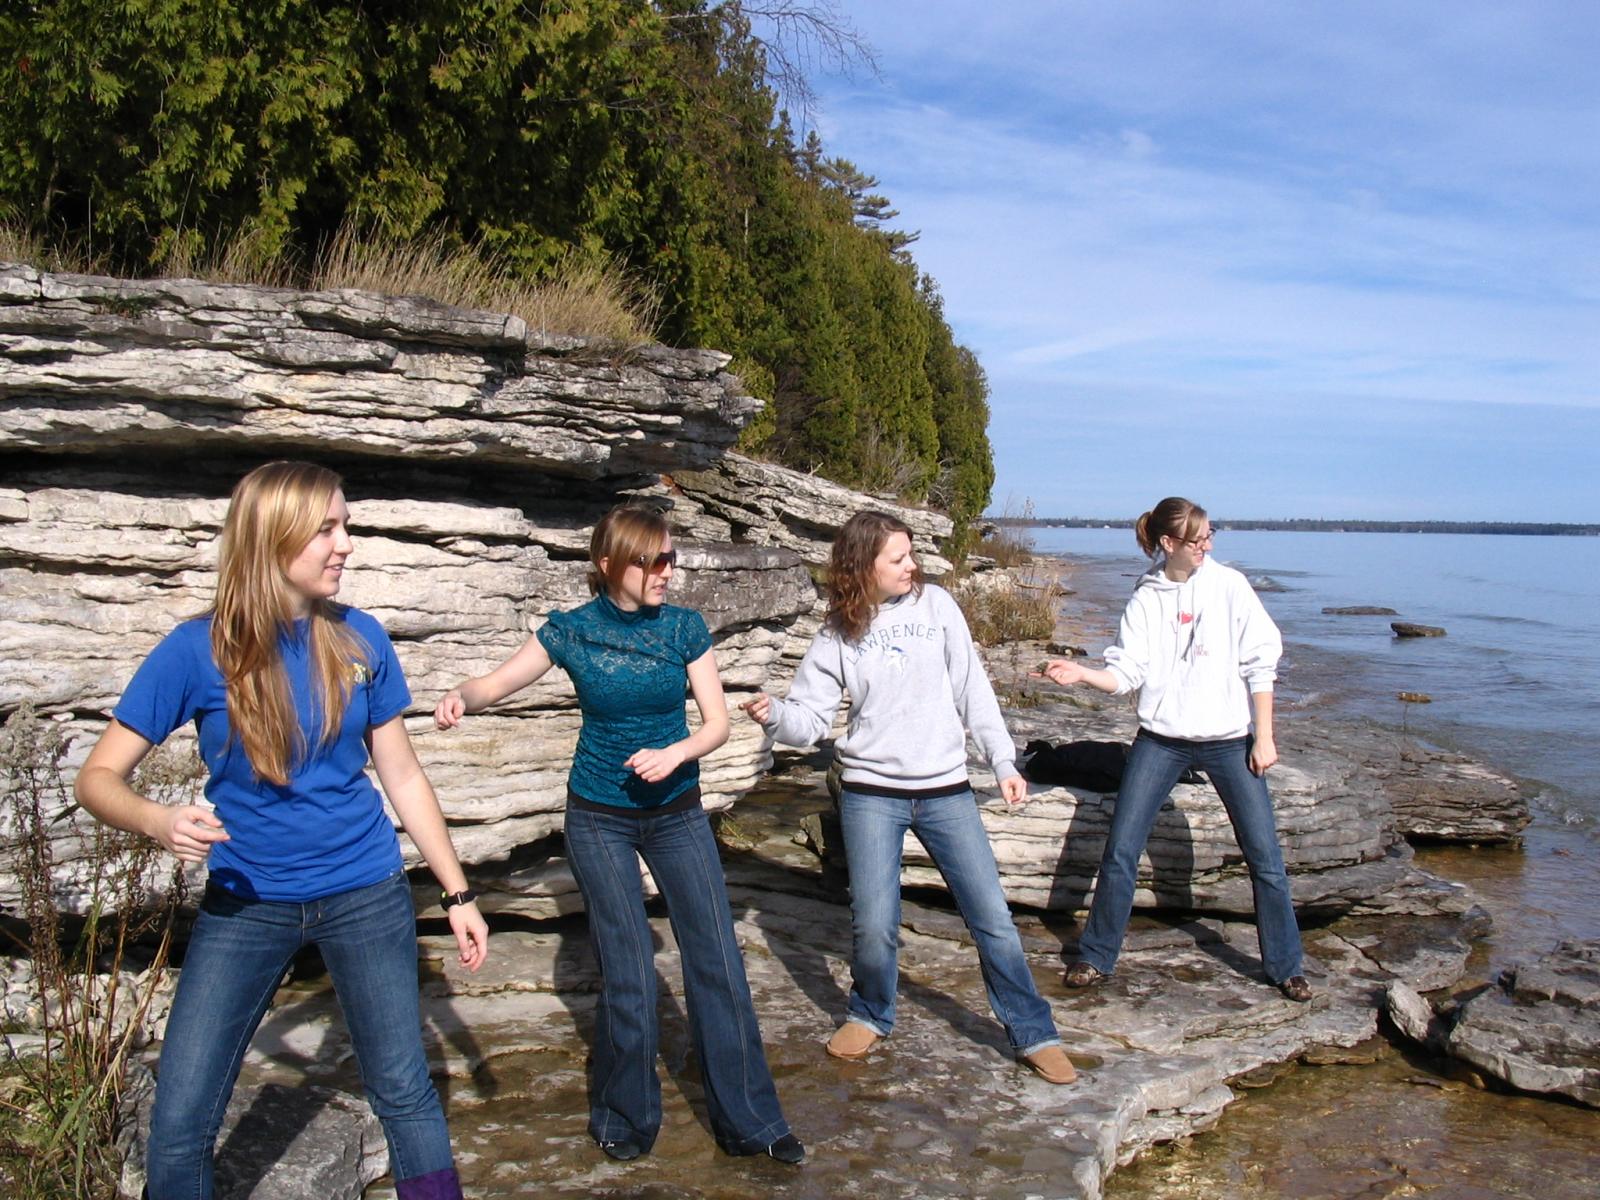 Oboists skipping stones in Lake Michigan